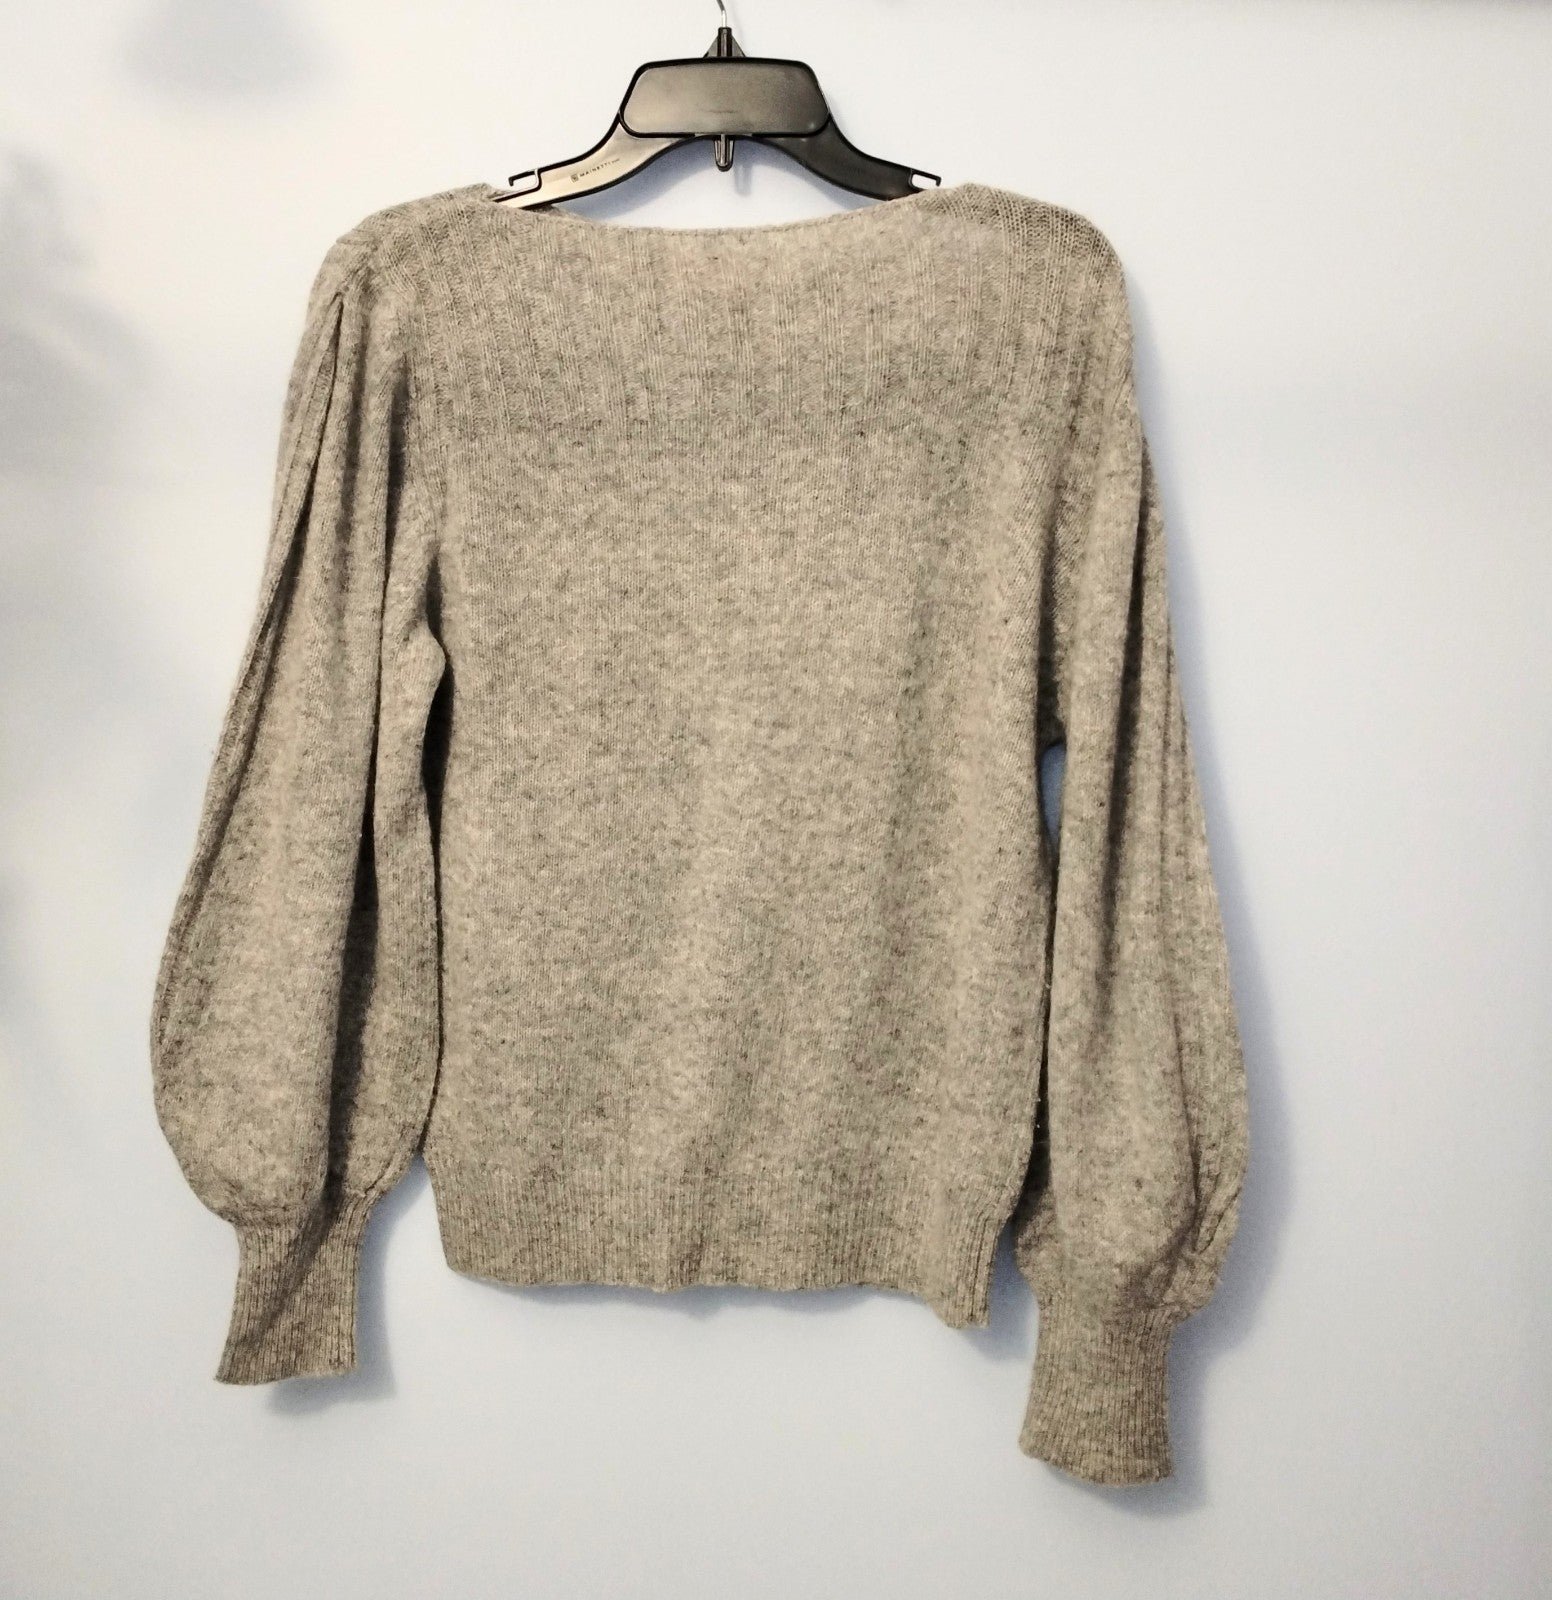 Perfect Ellen Tracy Vintage Sweater. Light Gray Boat Ne